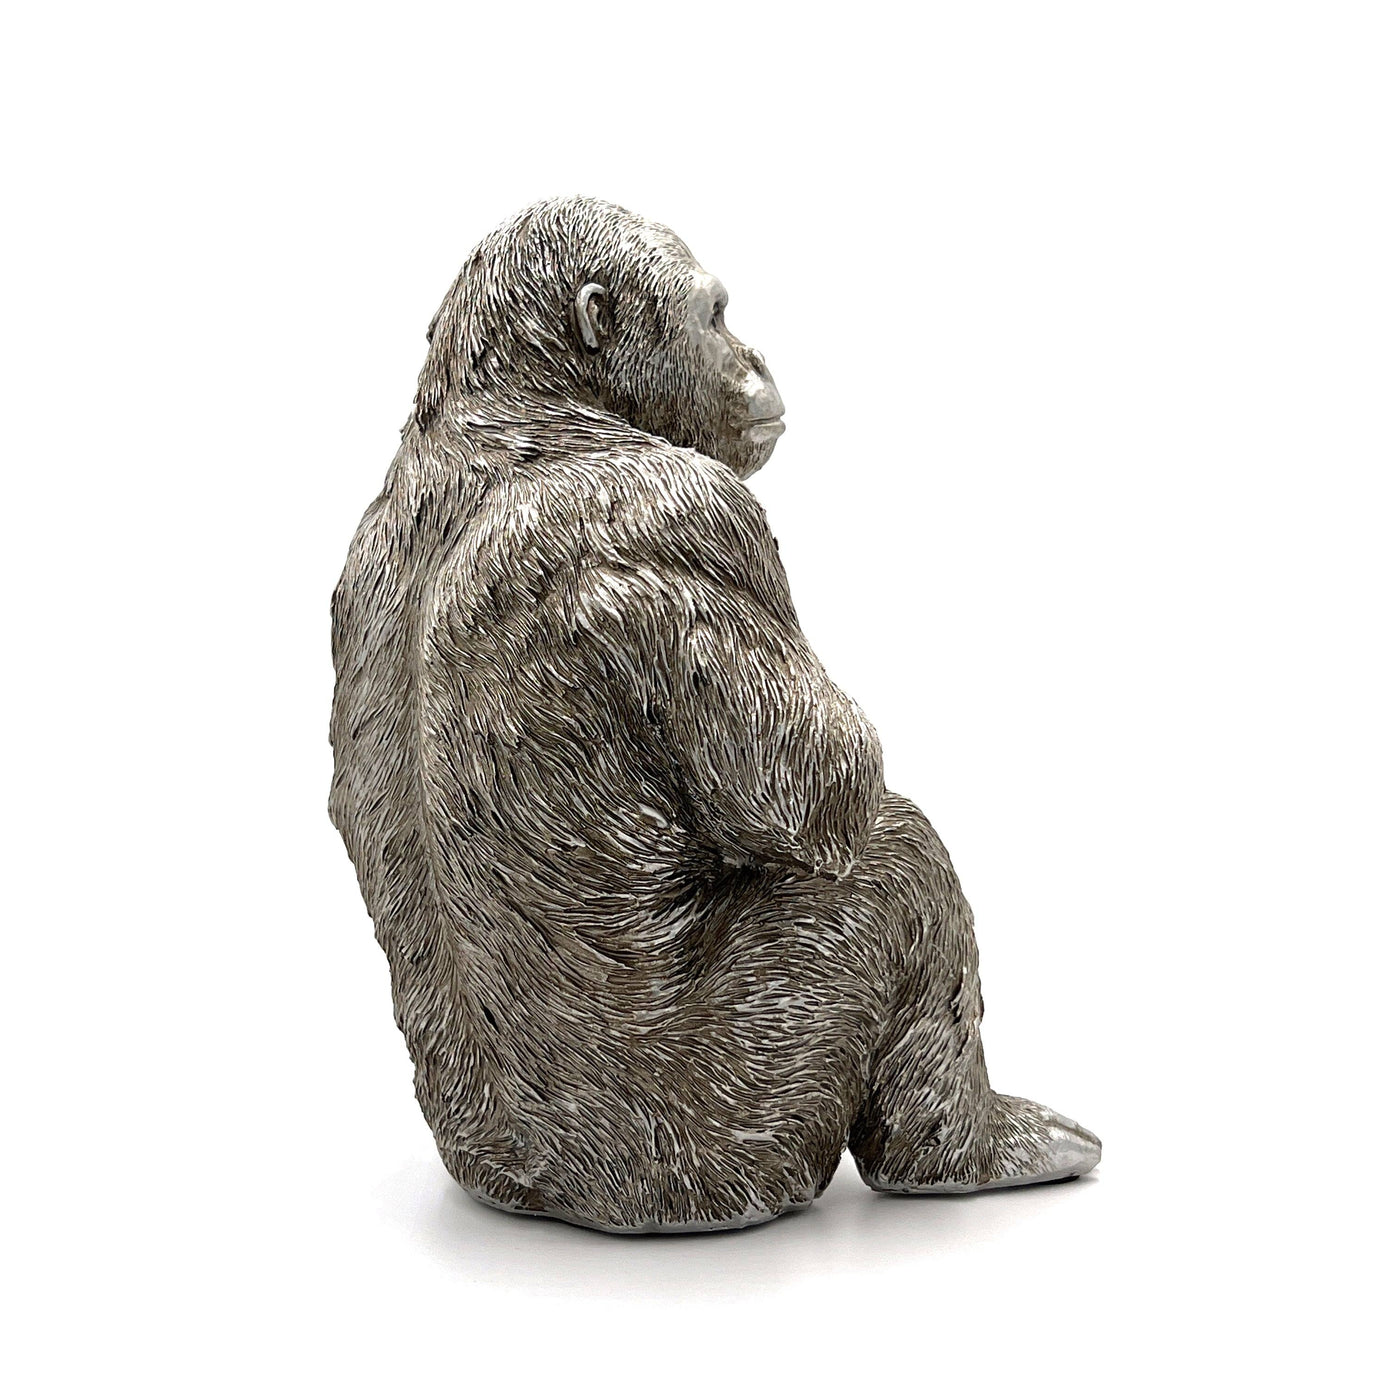 Antique Silver Large Sitting Gorilla Ornament - TwoBeeps.co.uk